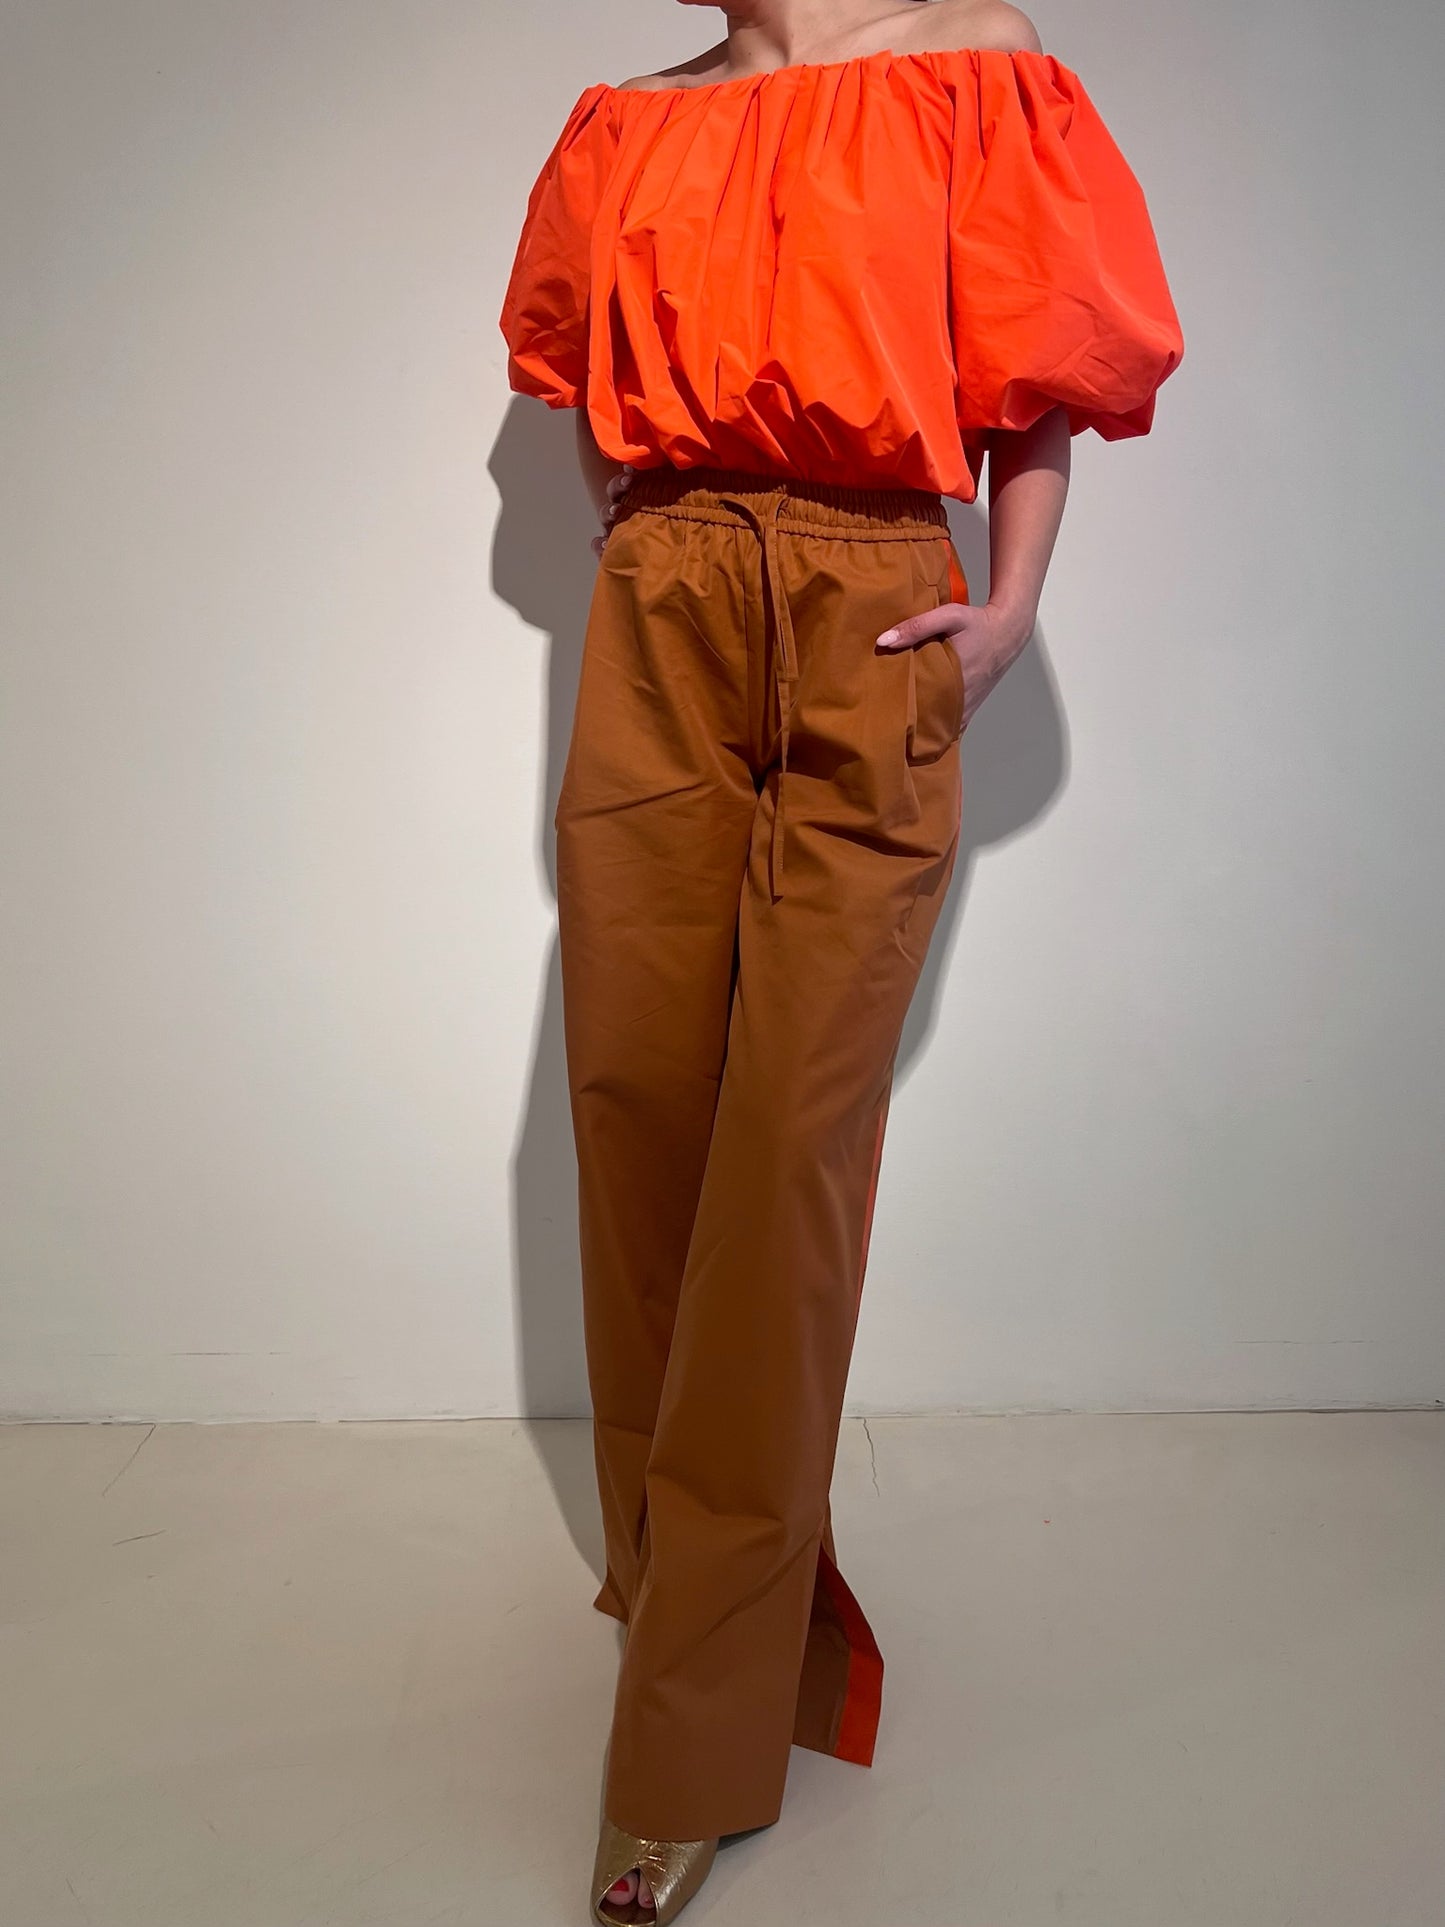 Pantaloni Marroni con Righe Arancio - Essentiel Antwerp